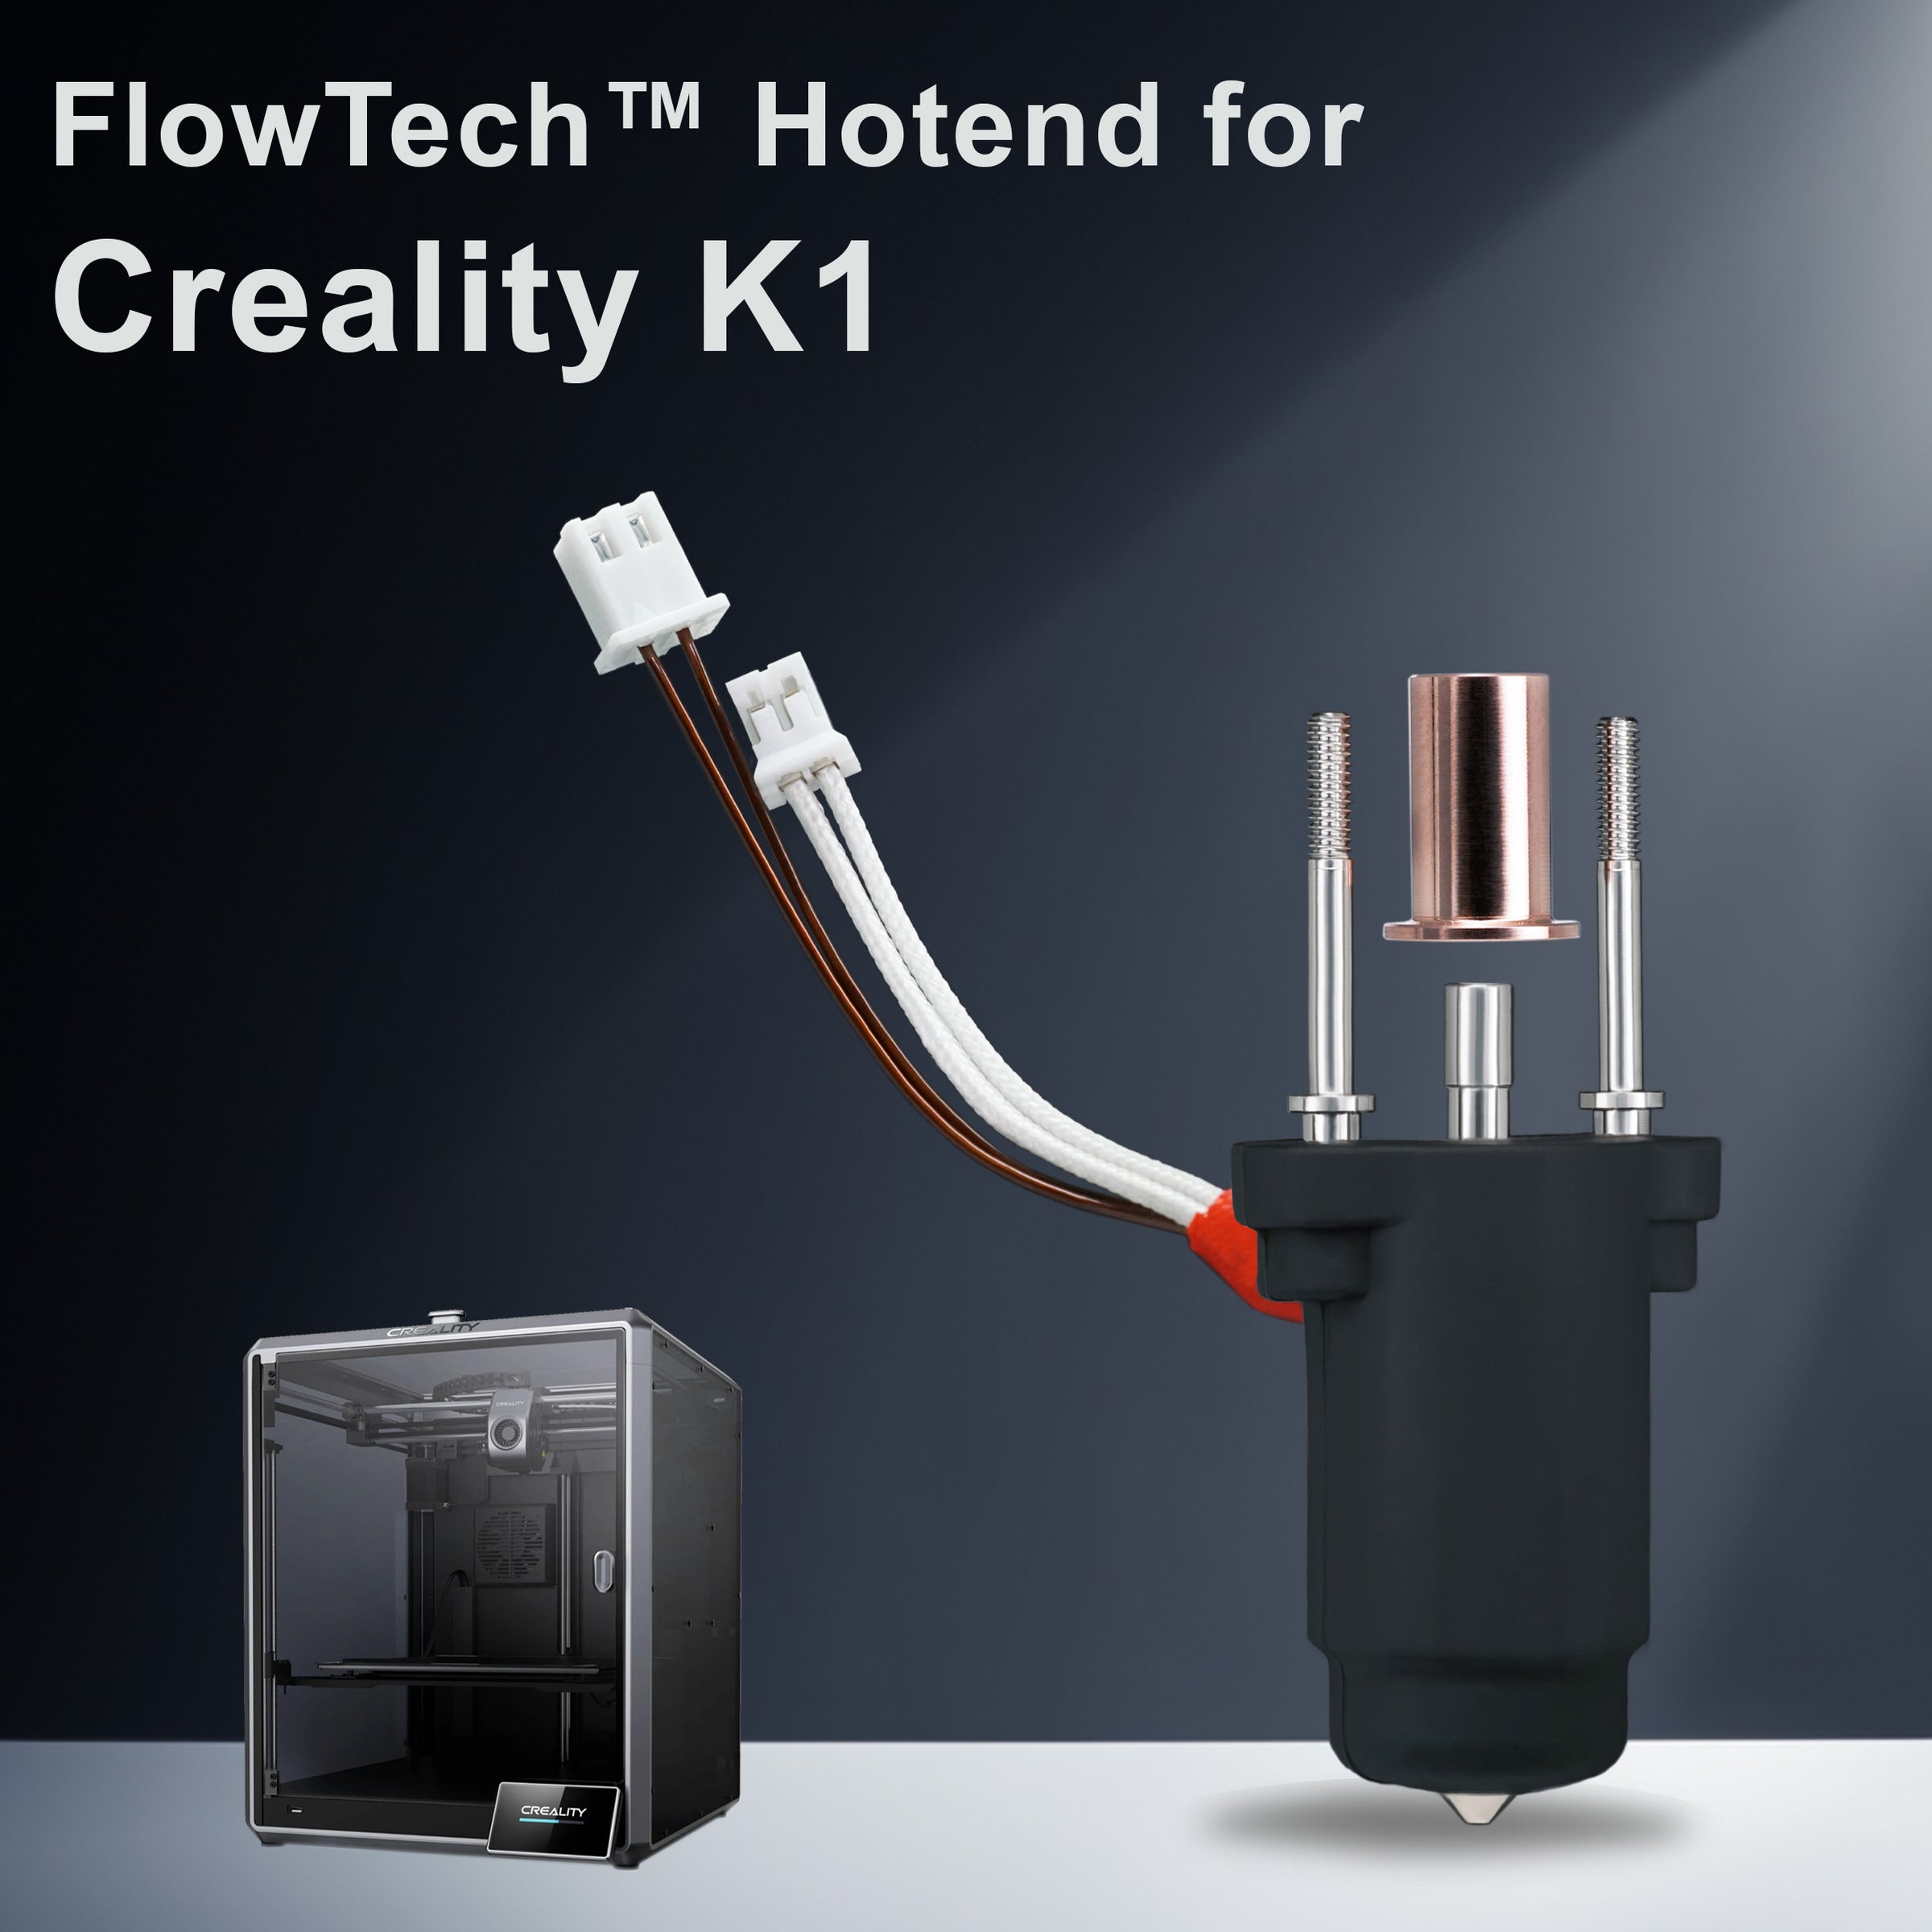 Micro Swiss FlowTech Hotend for Creality K1